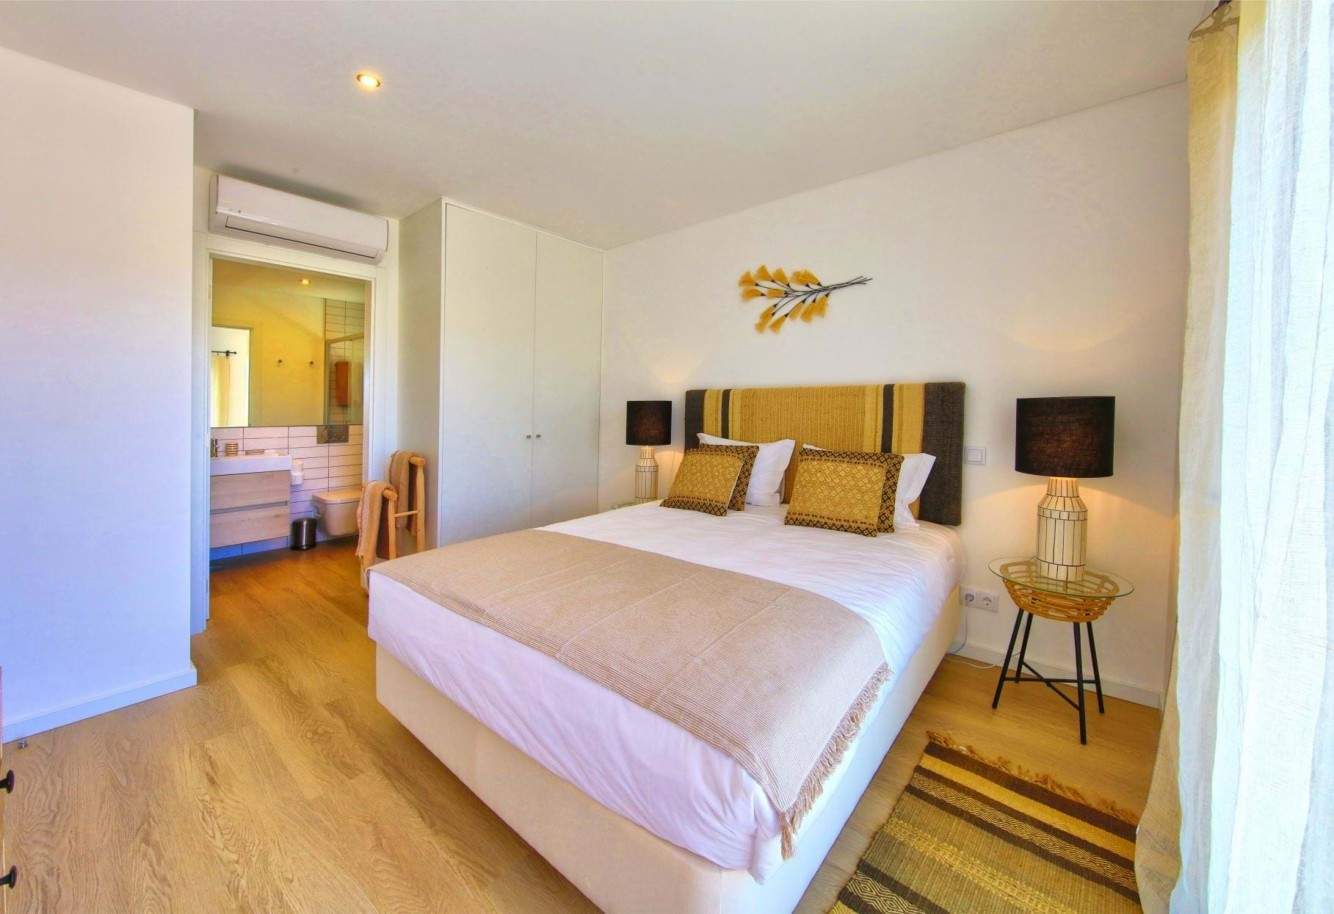 2+1 bedroom villa in resort, for sale in Carvoeiro, Algarve_204883